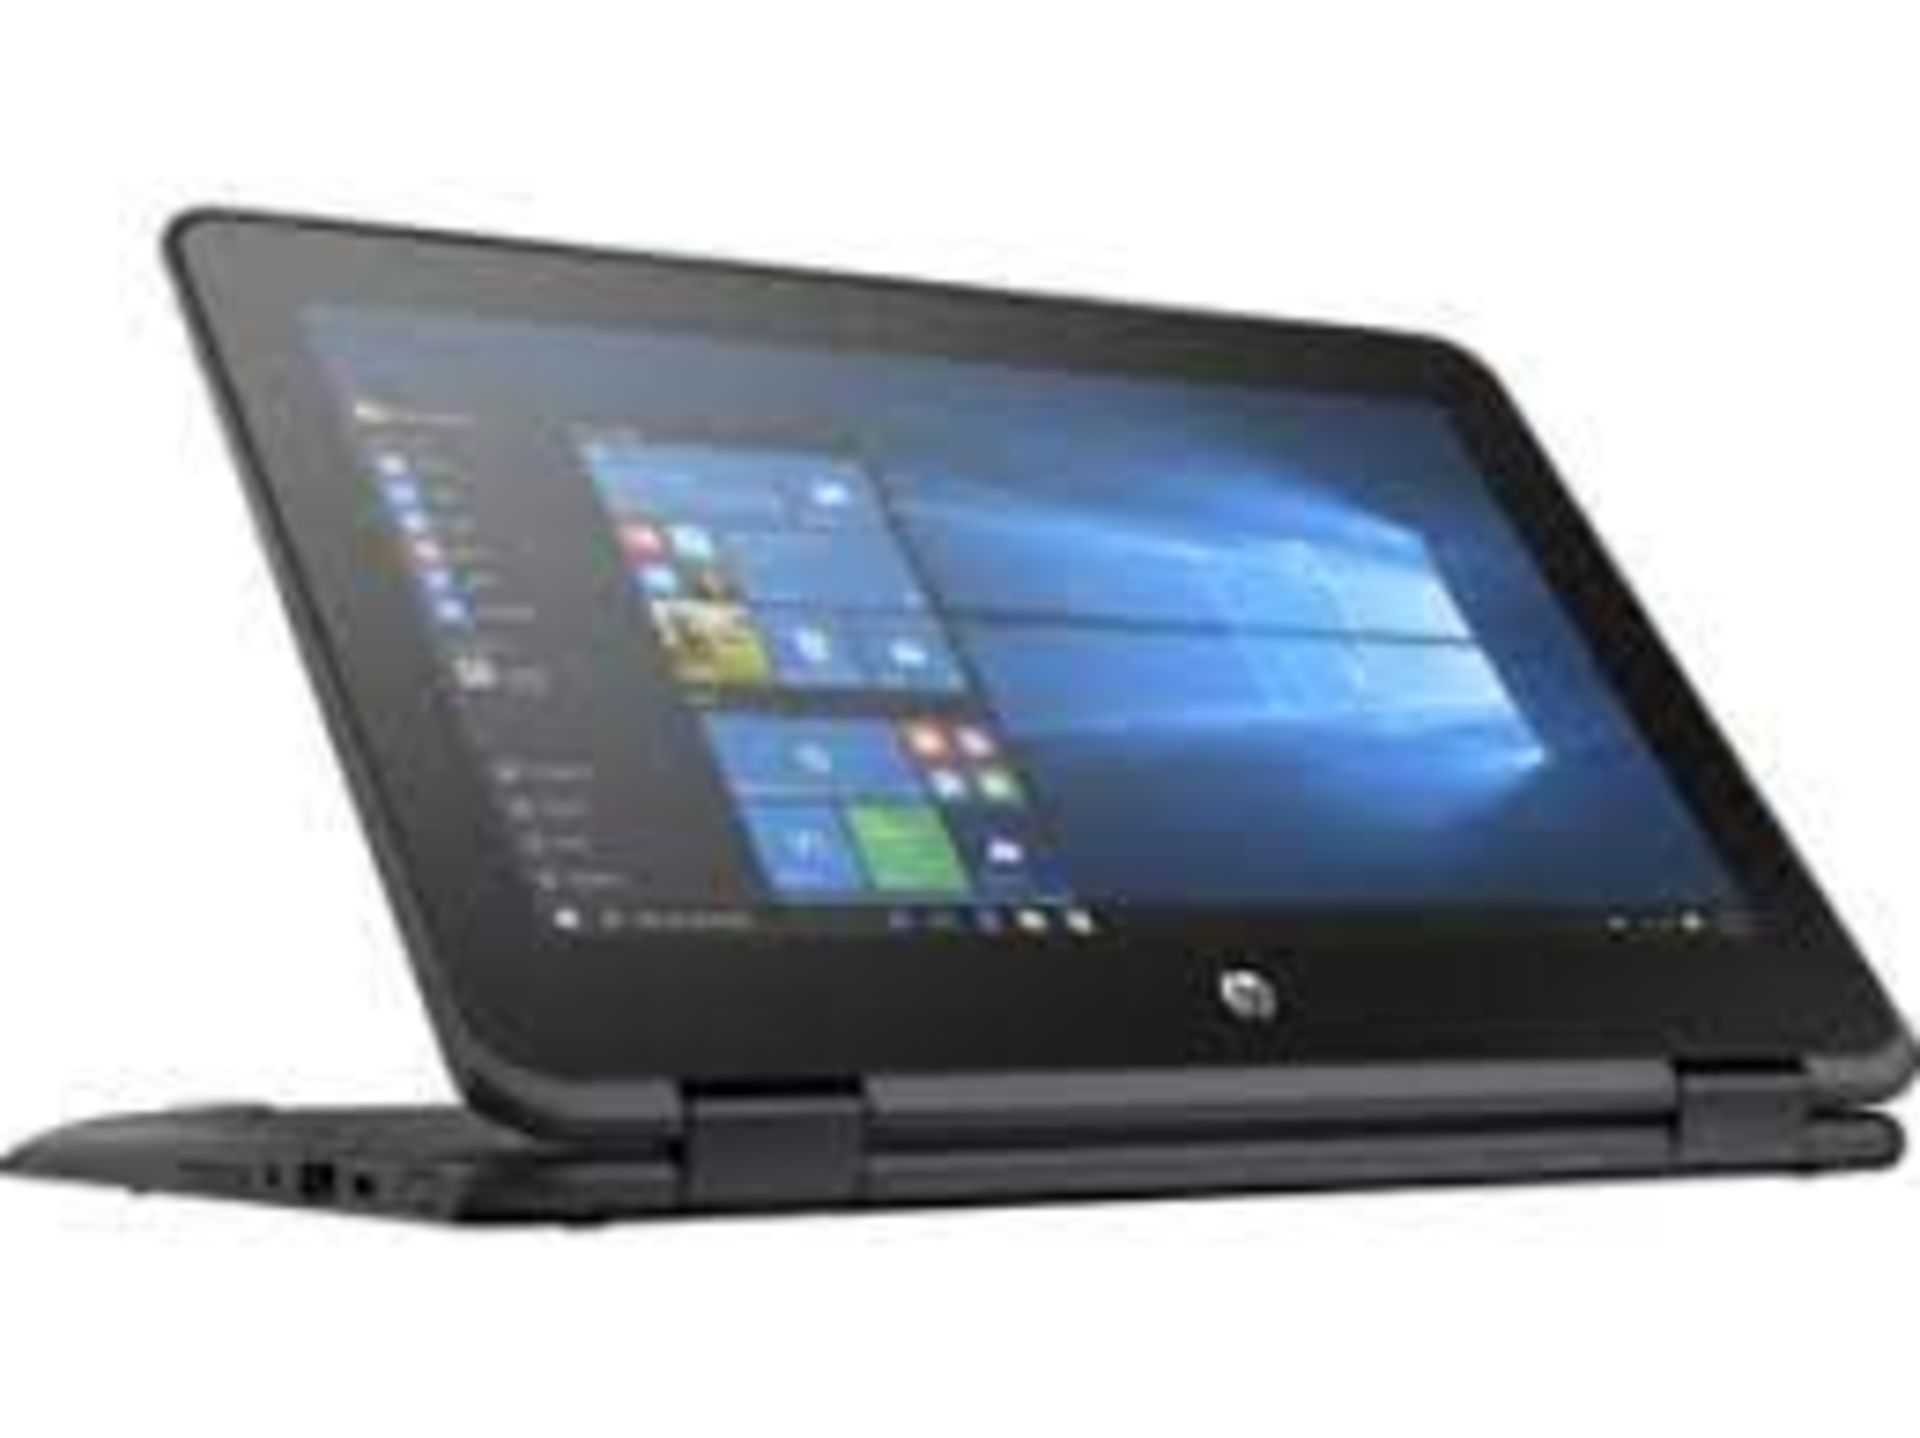 5 X HP ProBook x360 11 G1 EE 2 IN 1 Laptops (Pentium Quad Core/4 GB/128 GB SSD) RRP £450 EACH. - Image 3 of 3